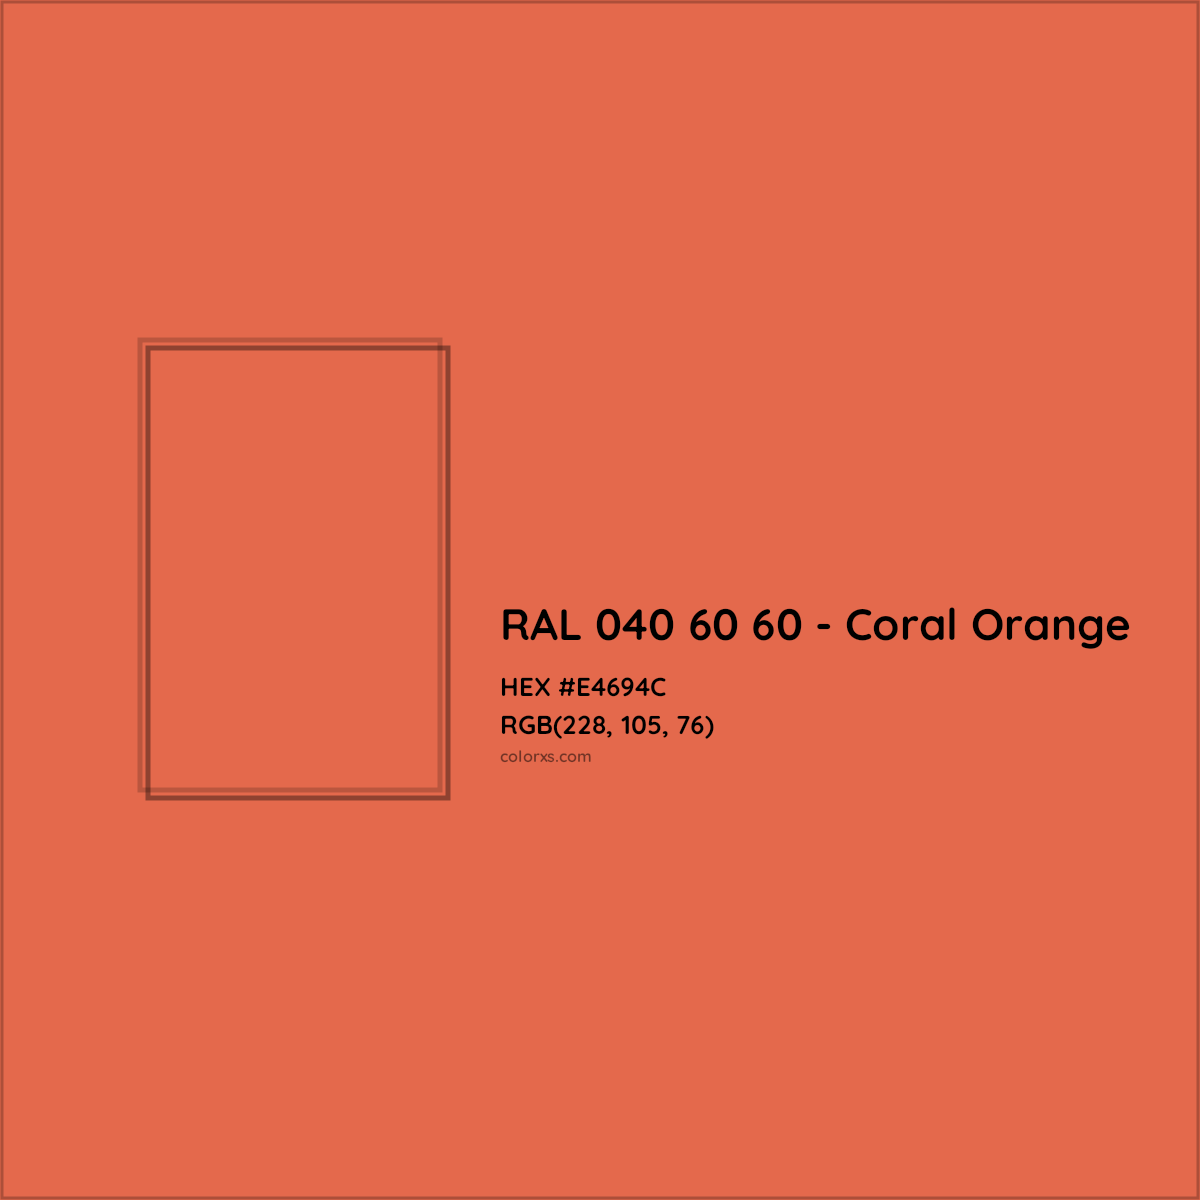 HEX #E4694C RAL 040 60 60 - Coral Orange CMS RAL Design - Color Code